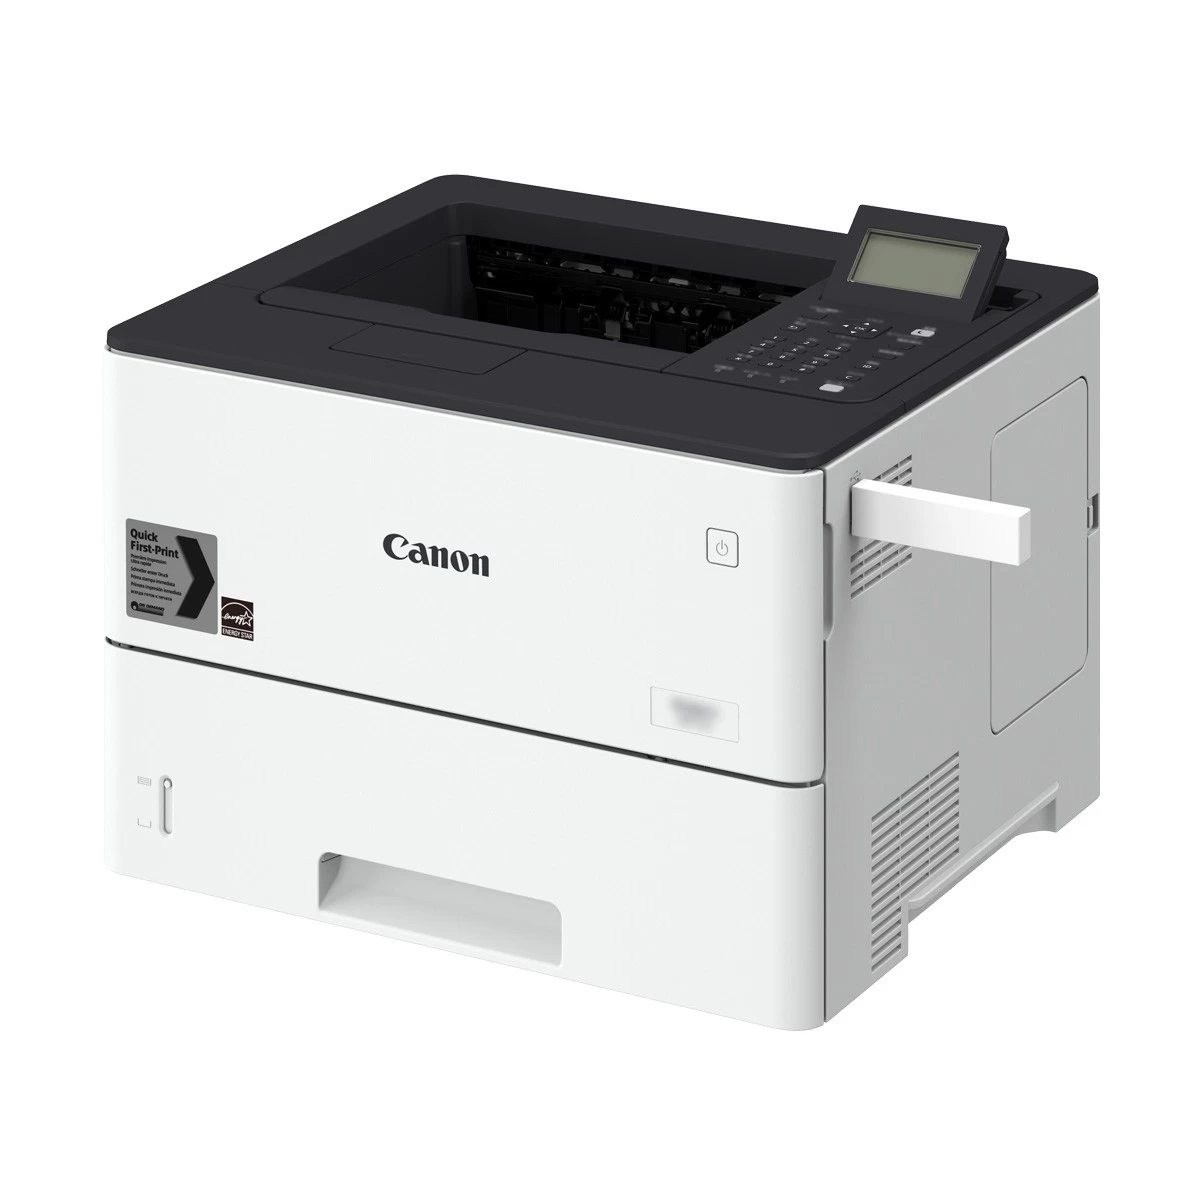 Canon LBP312x Mono Laser Printer